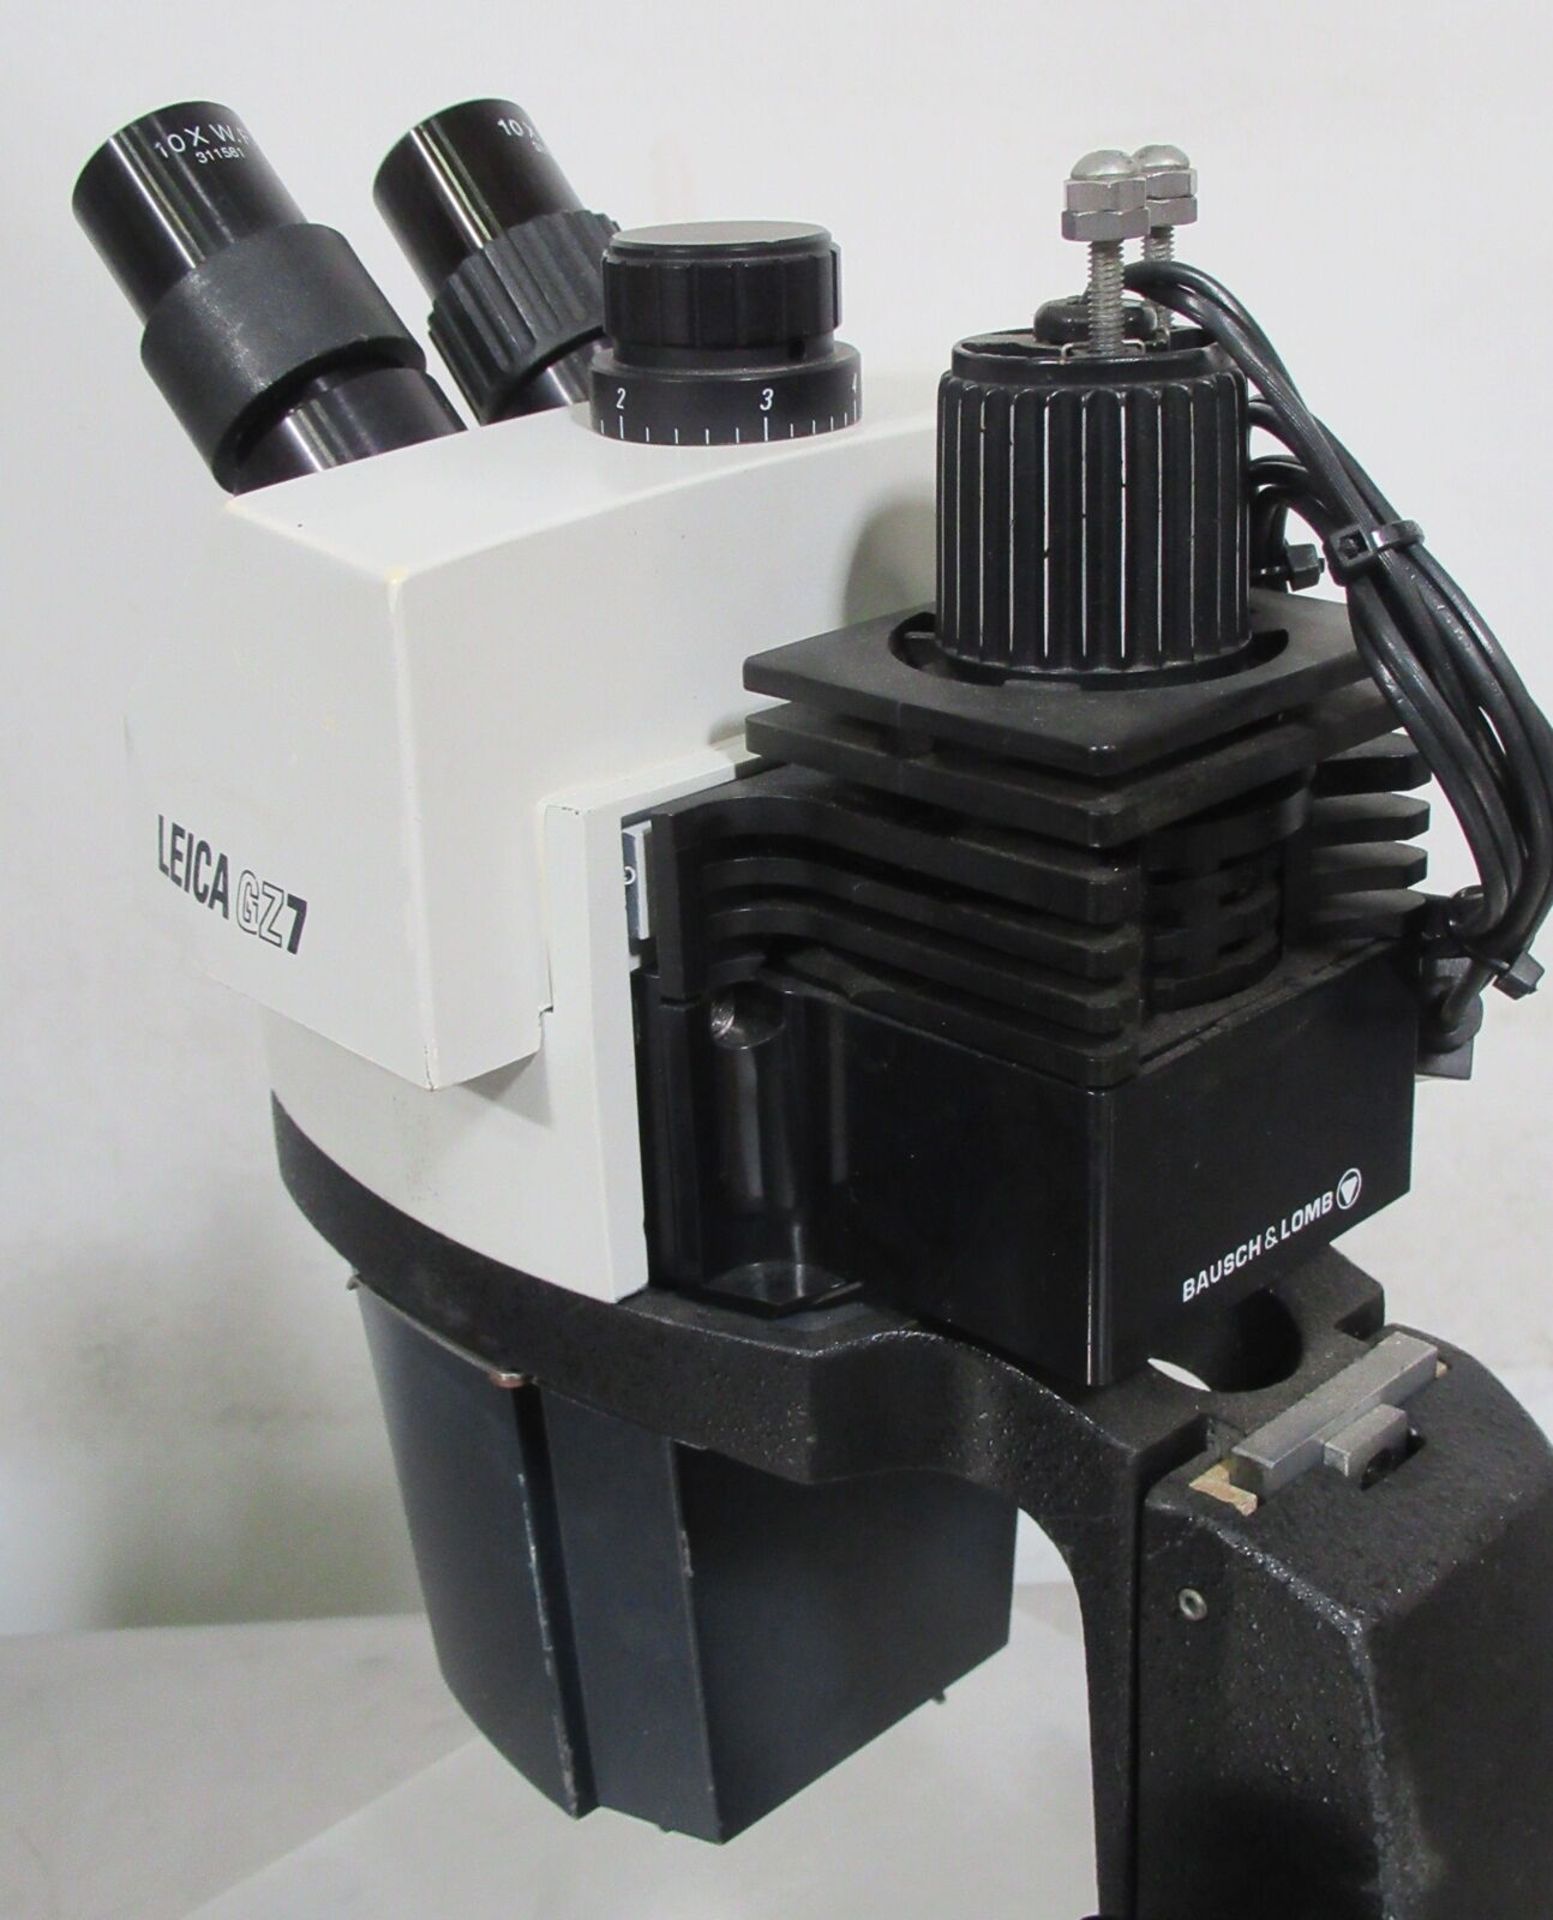 Leica GZ7 Stereo Zoom Microscope w/ Stand, 10X WF Eyepieces, Illuminator - Gilroy - Image 5 of 6